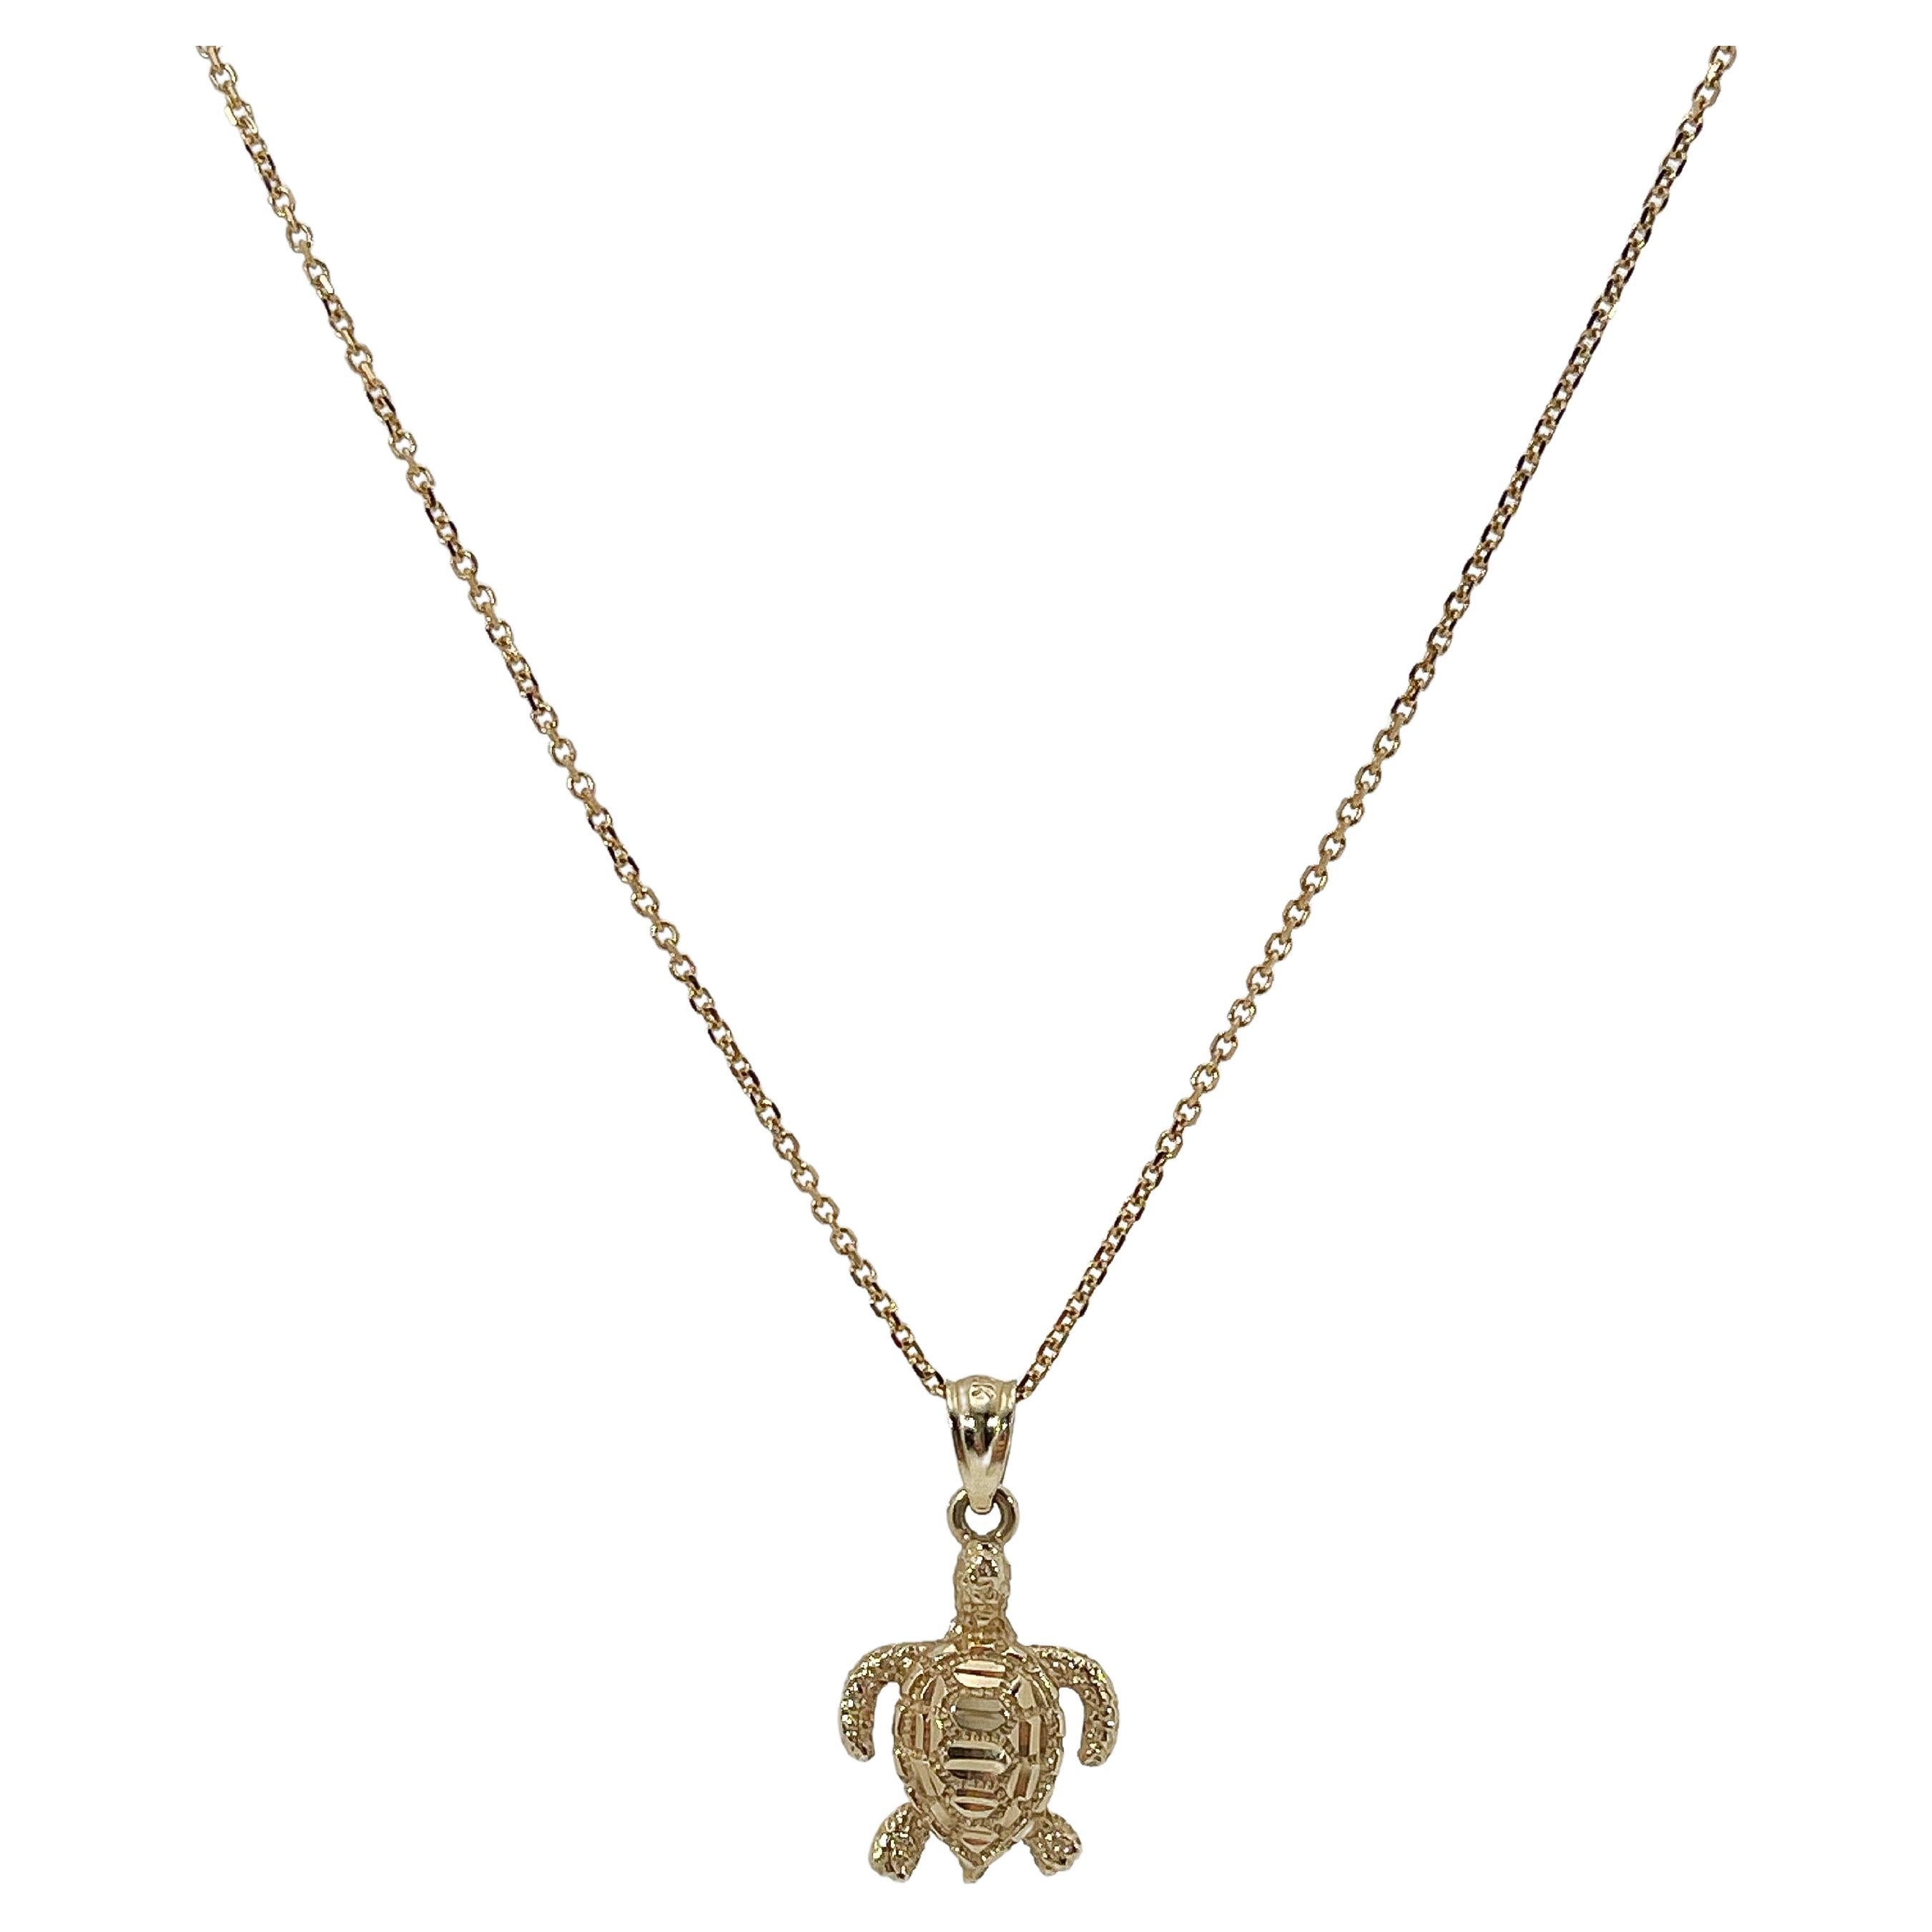 14K Yellow Gold Diamond Cut Turtle Pendant Necklace